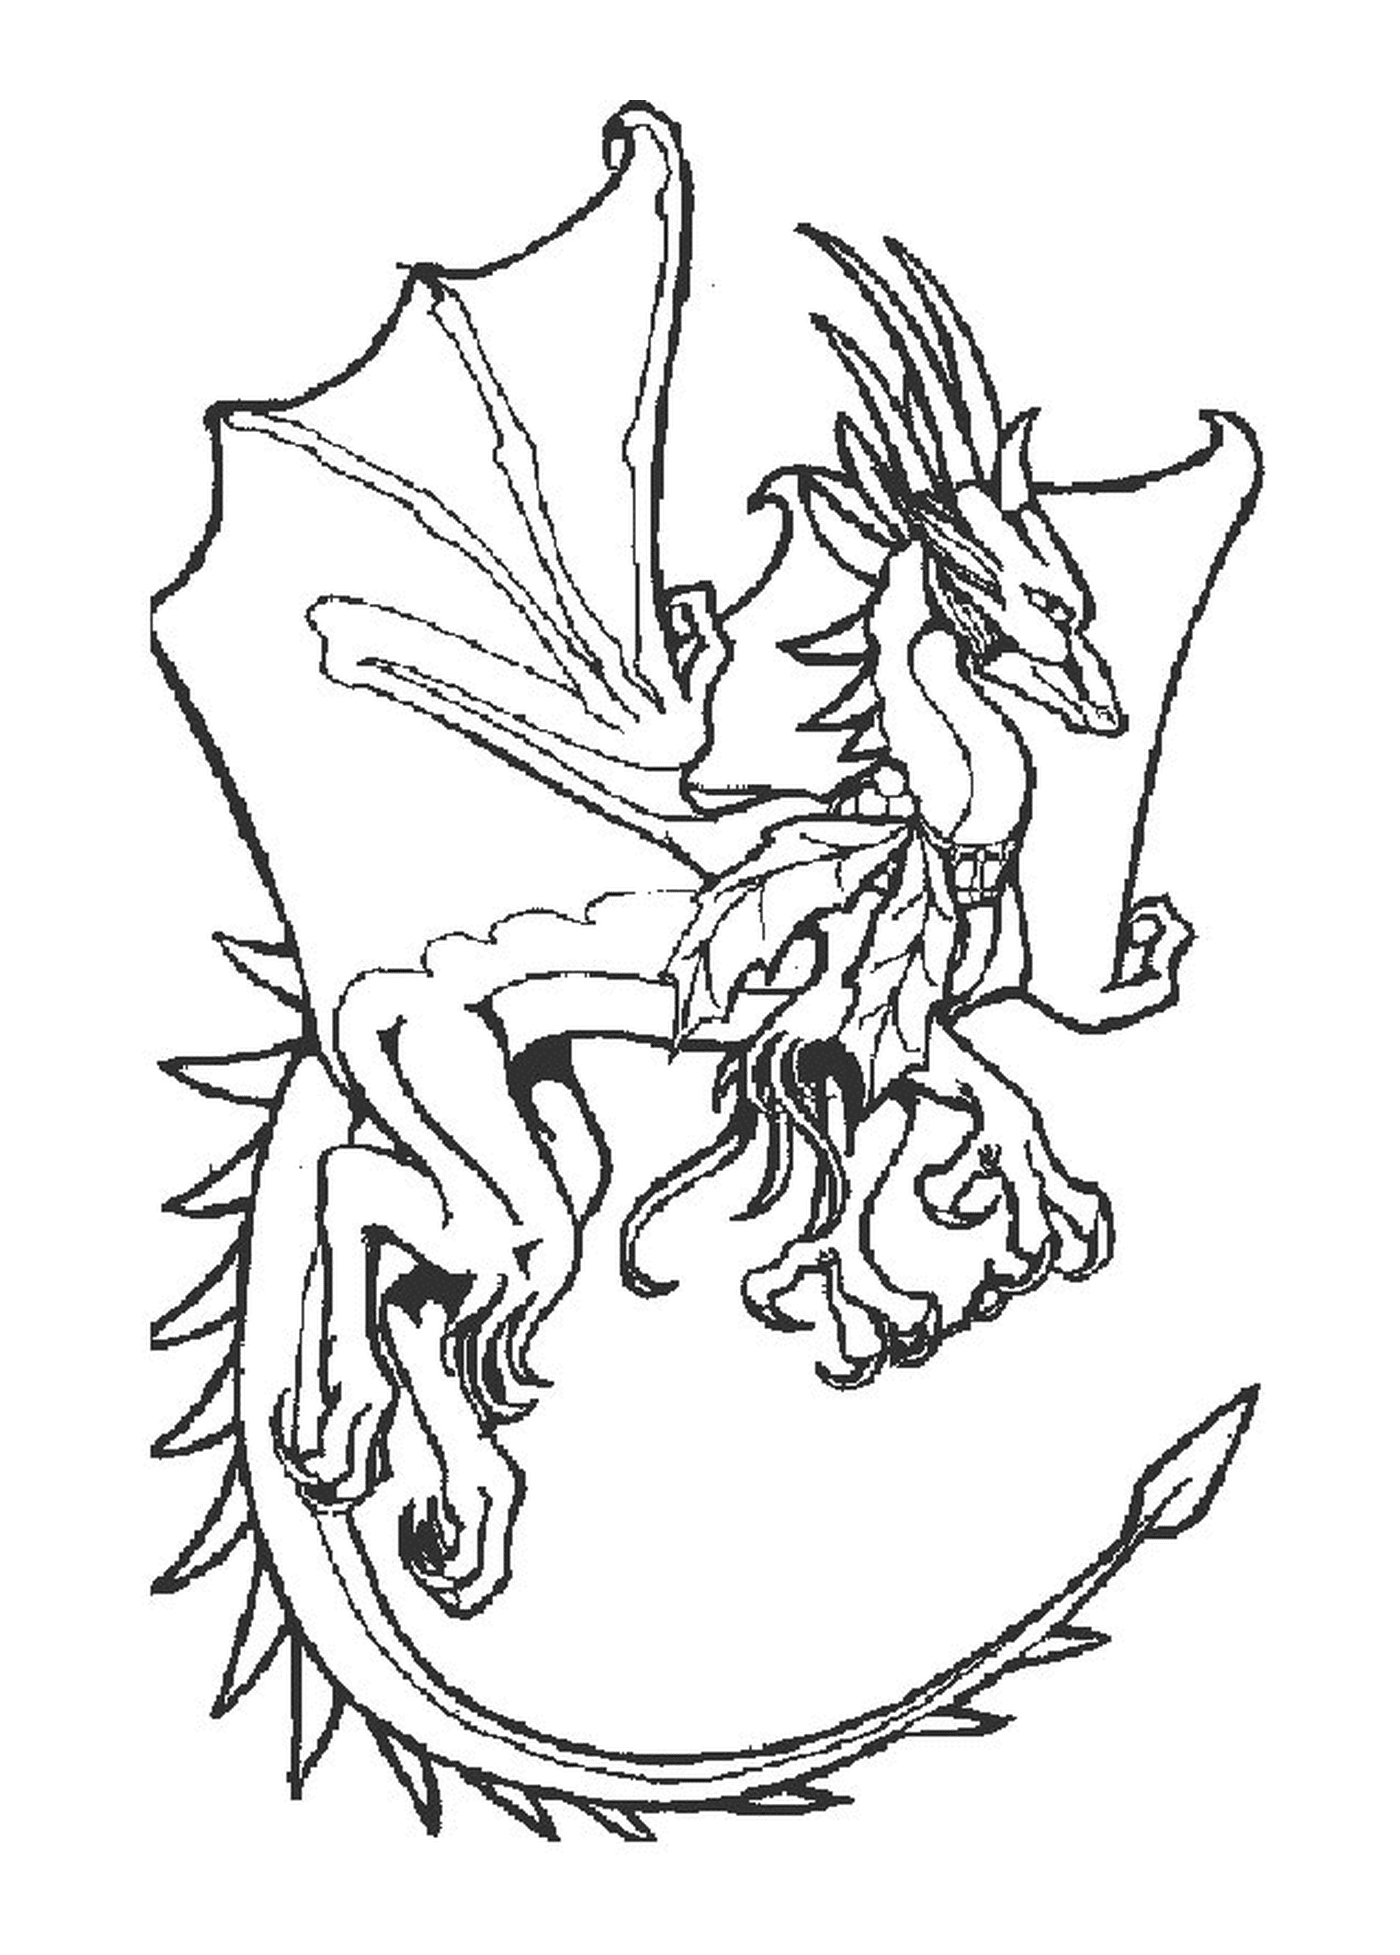   Un dragon avec de grandes ailes 